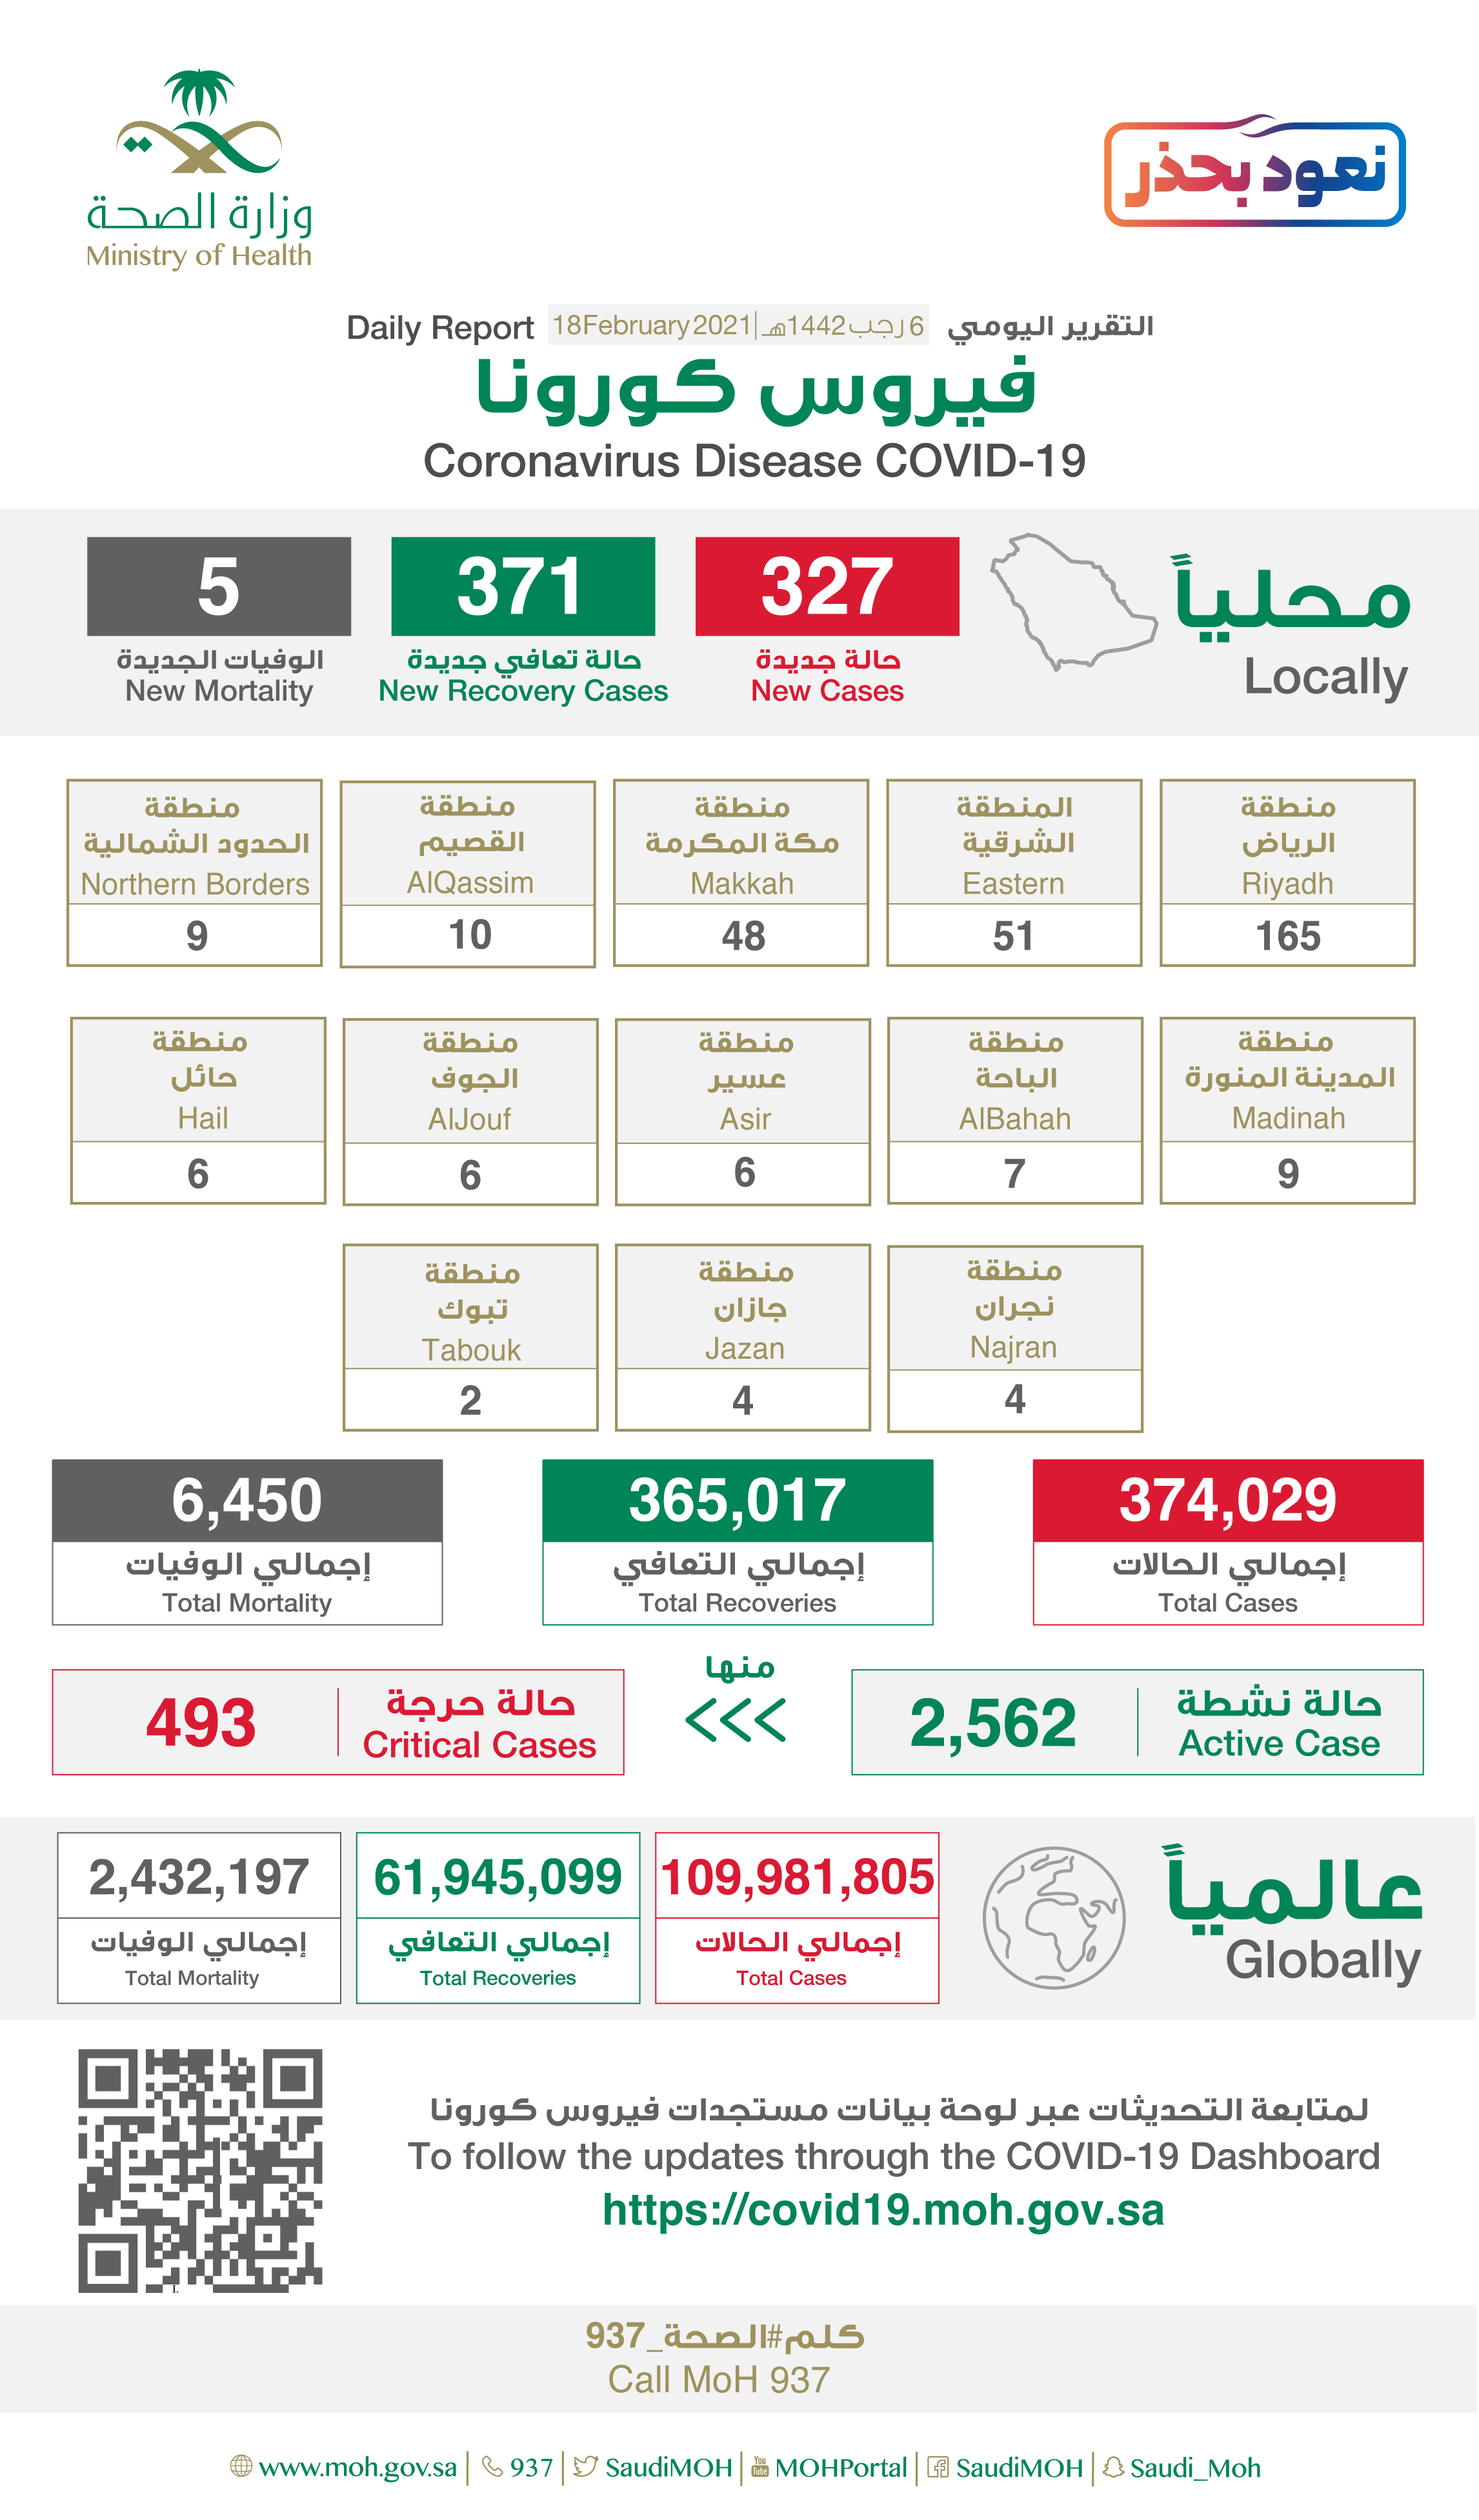 Saudi Arabia Coronavirus : Total Cases :374,029 , New Cases : 327, Cured : 365,017 , Deaths: 6,450, Active Cases : 2,562